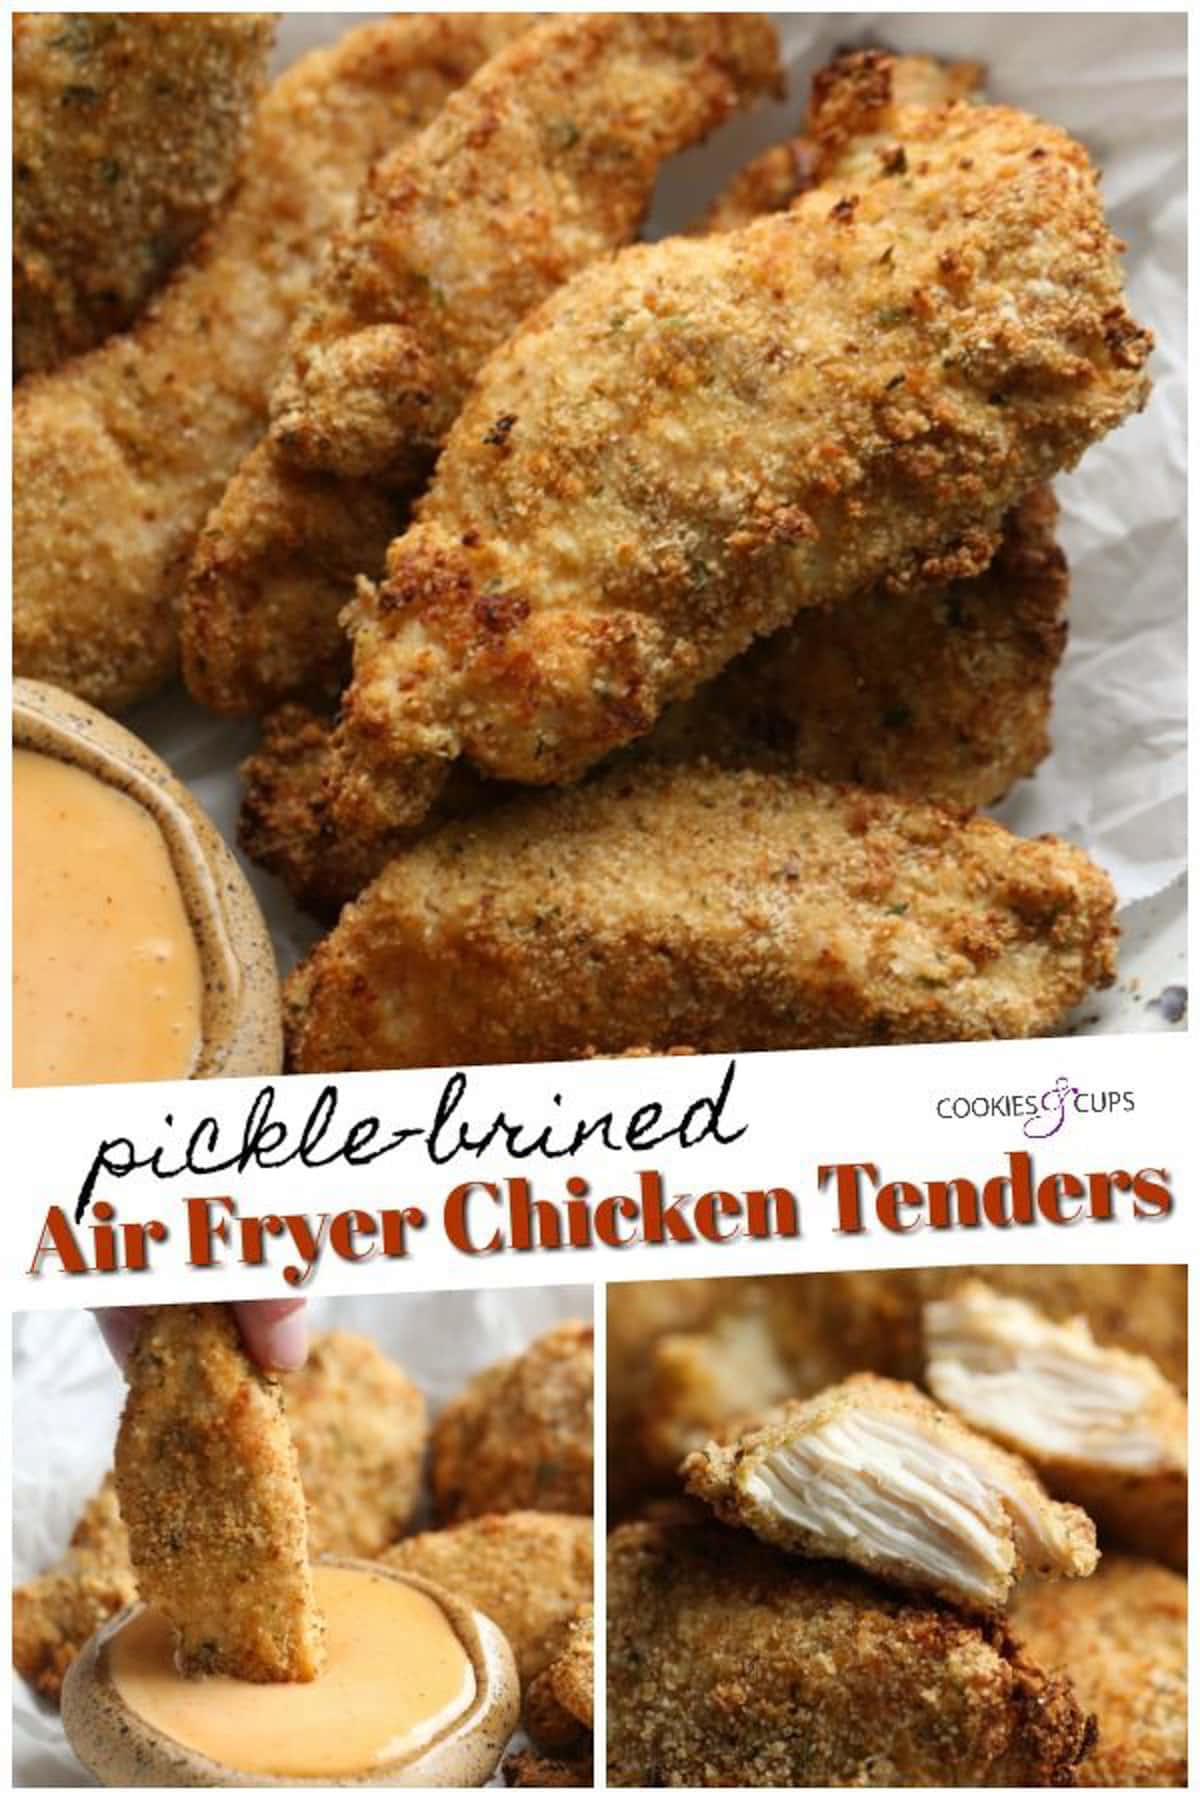 Air fryer chicken tenders Pinterest collage